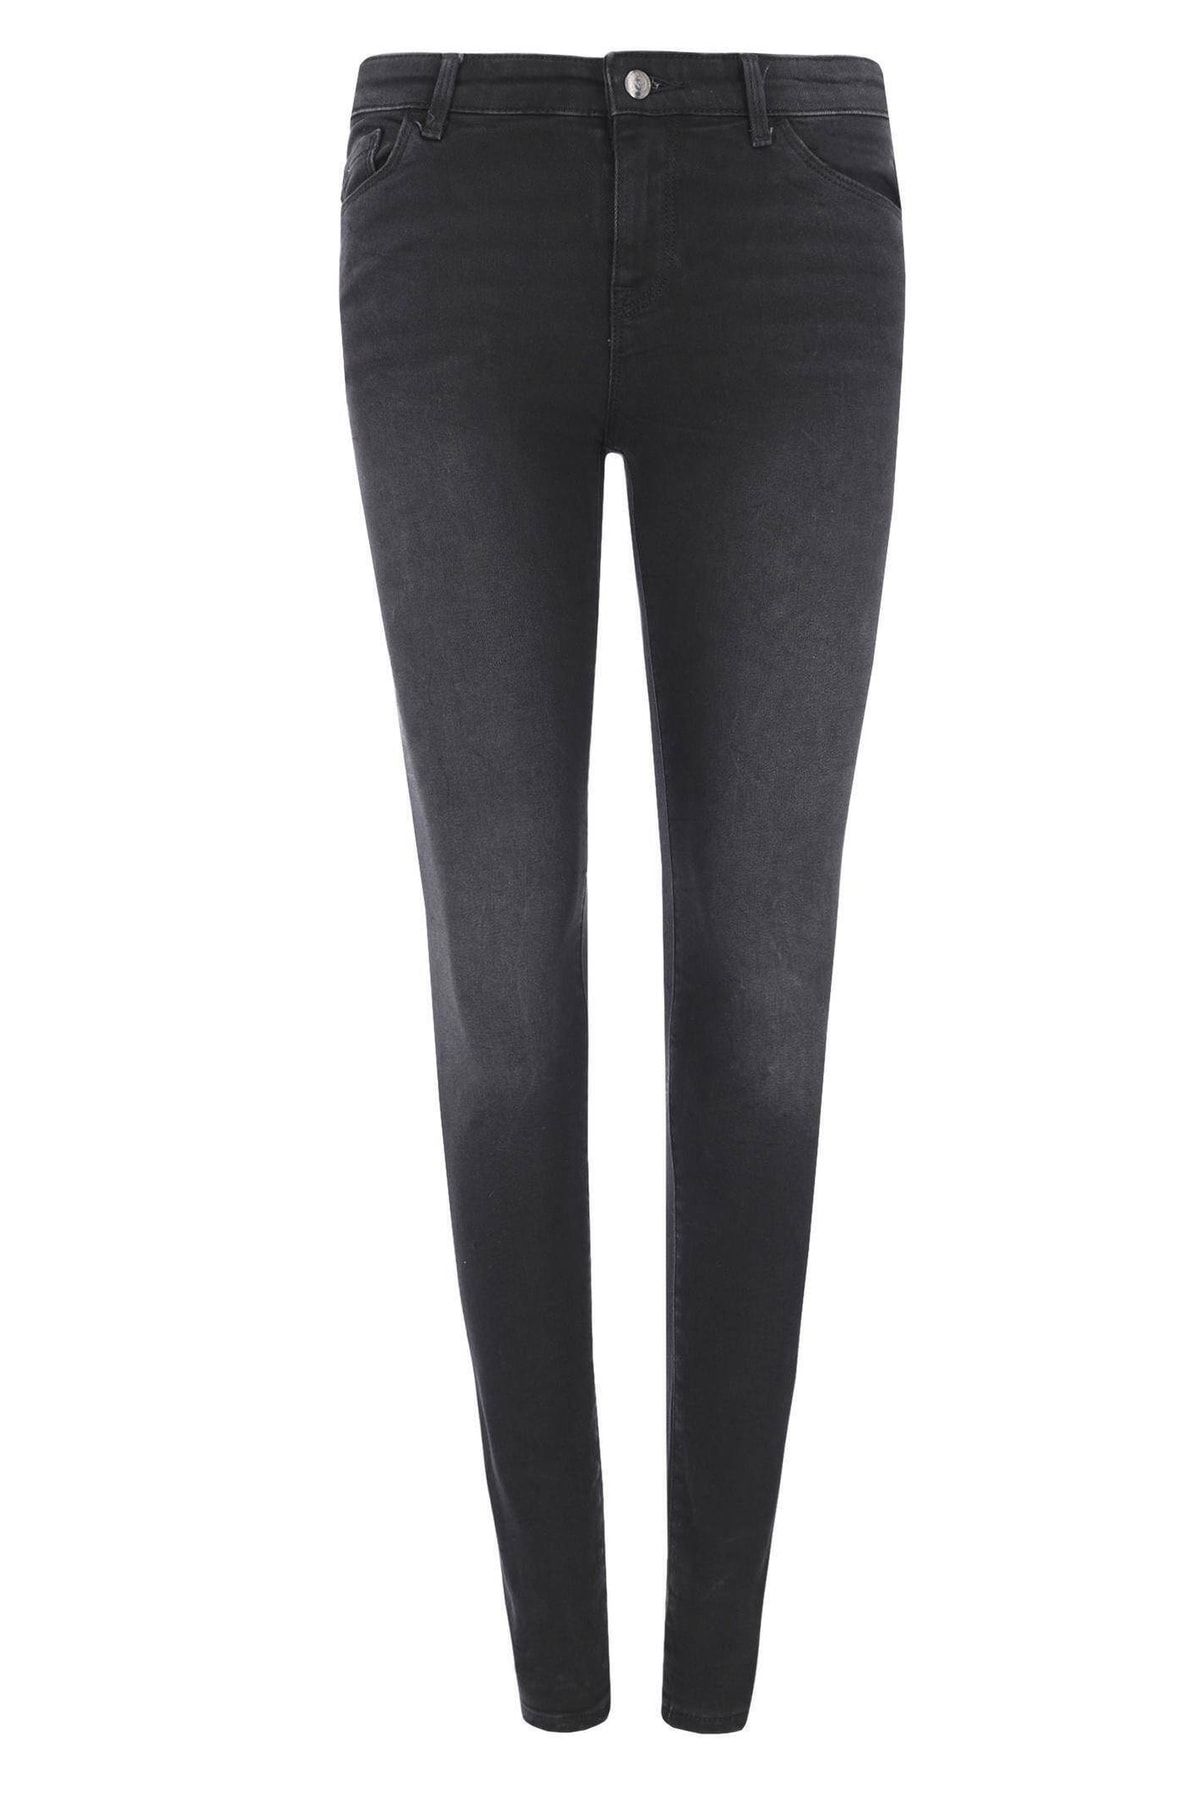 Emporio Armani Kadın Slim Fit Normal Bel Pamuklu Siyah Pantolon 6z2j23 2d0tz-005